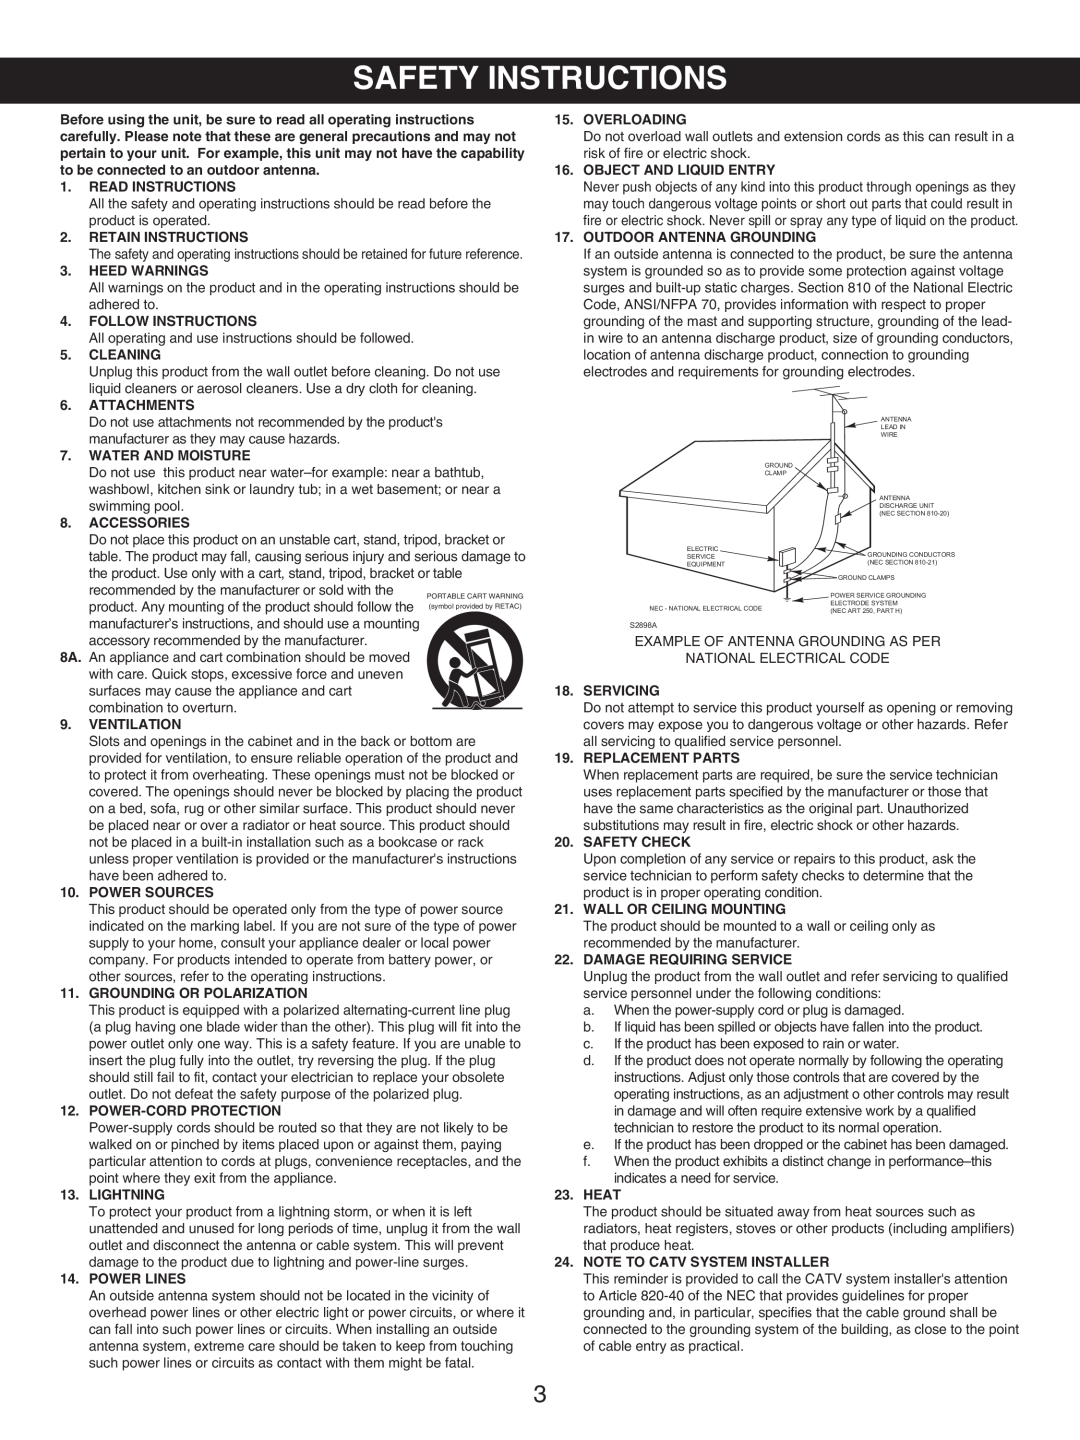 Memorex MKS5627 manual Safety Instructions 